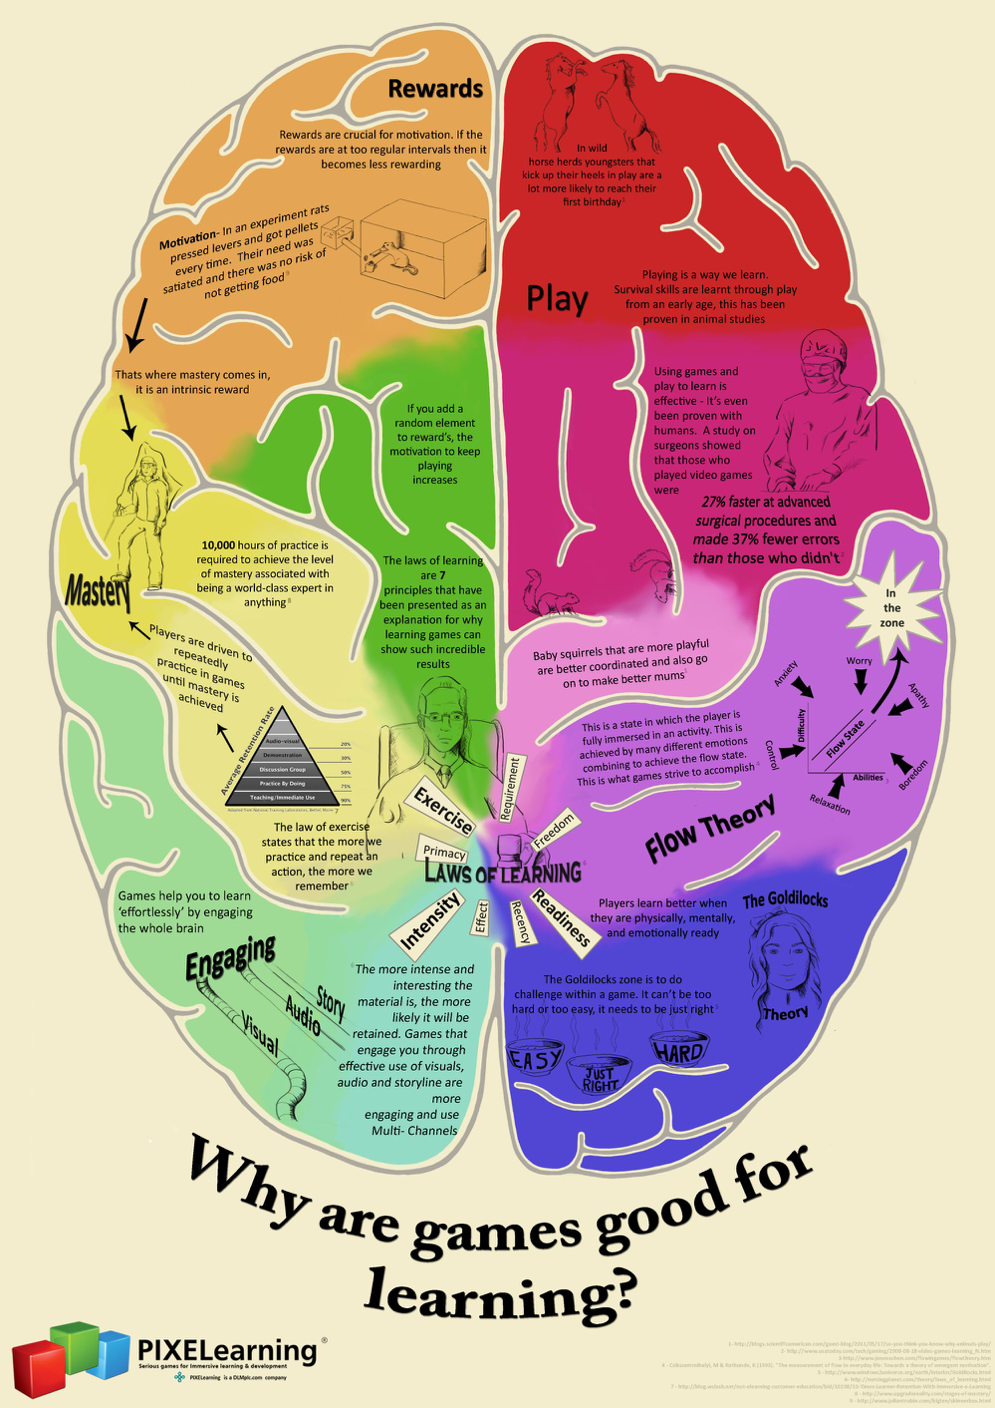 Colourful cartoon cross-section of a brain